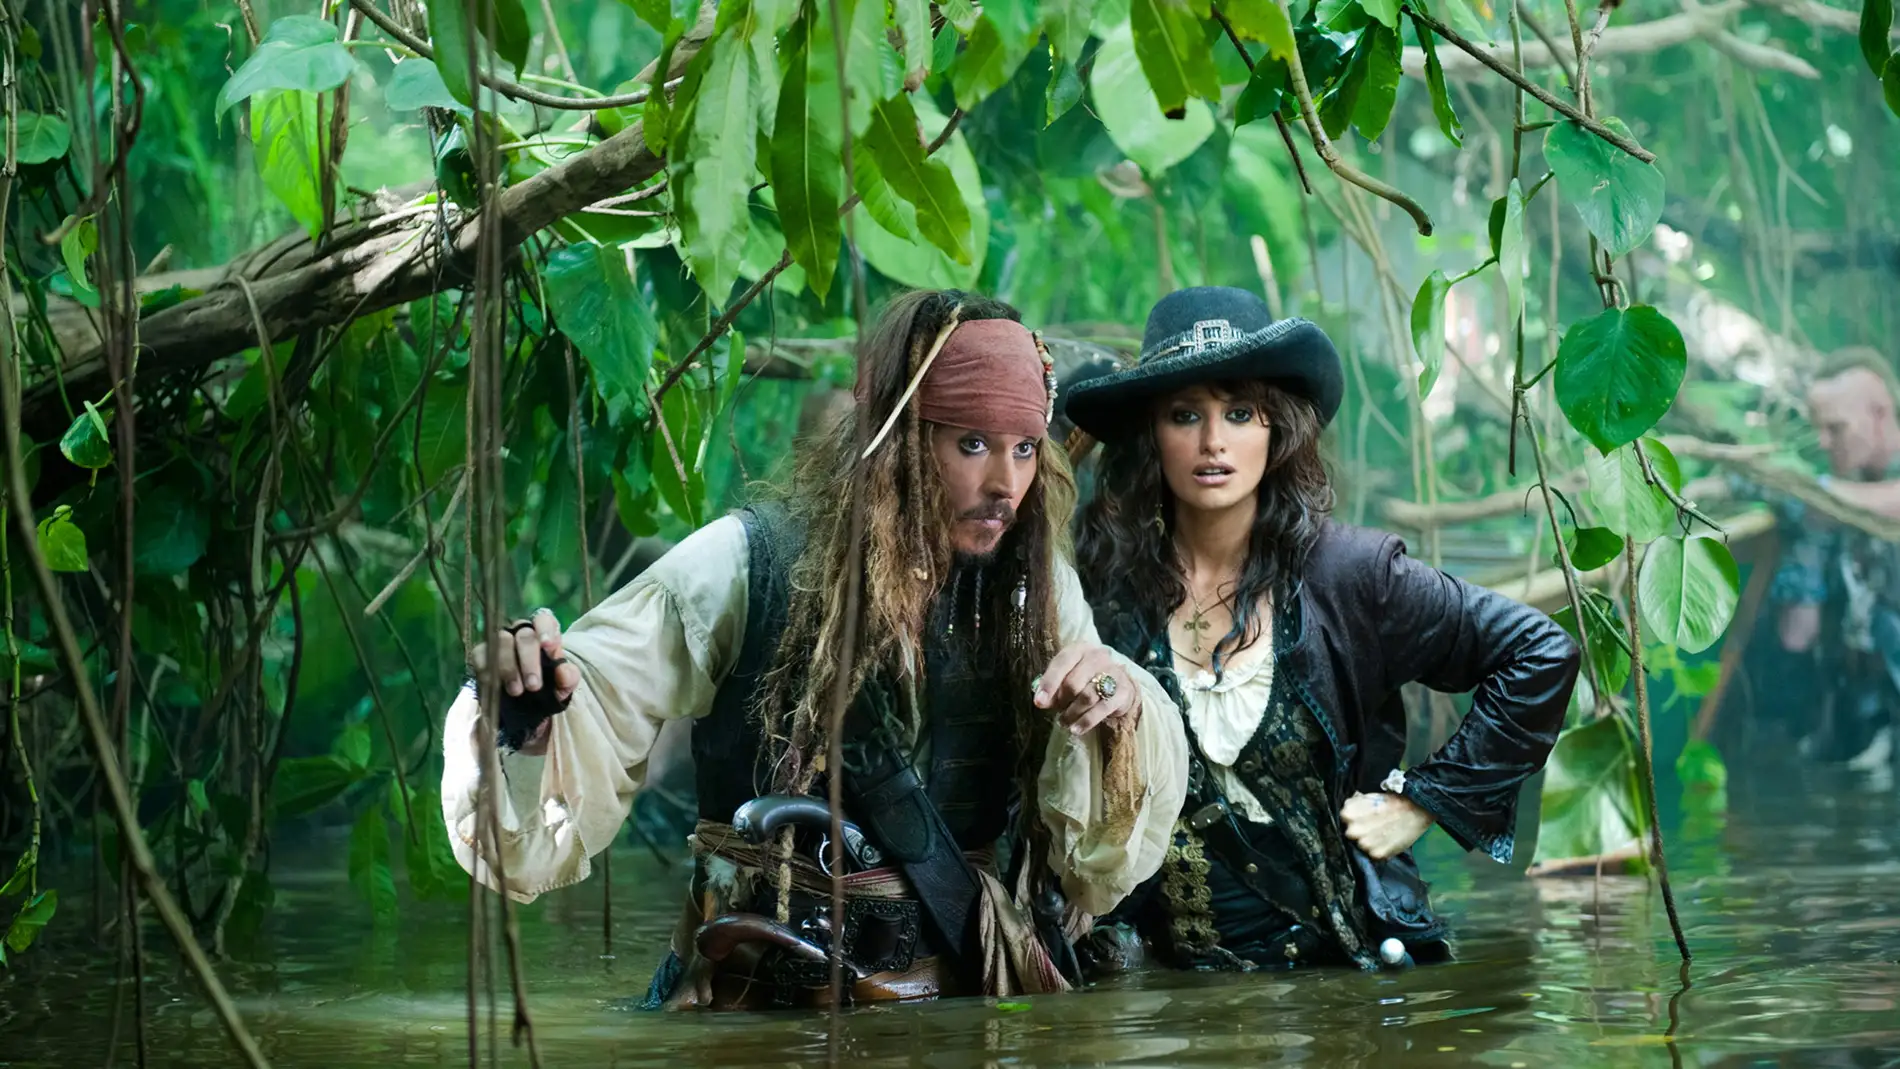 Preestreno de 'Piratas del Caribe 4'